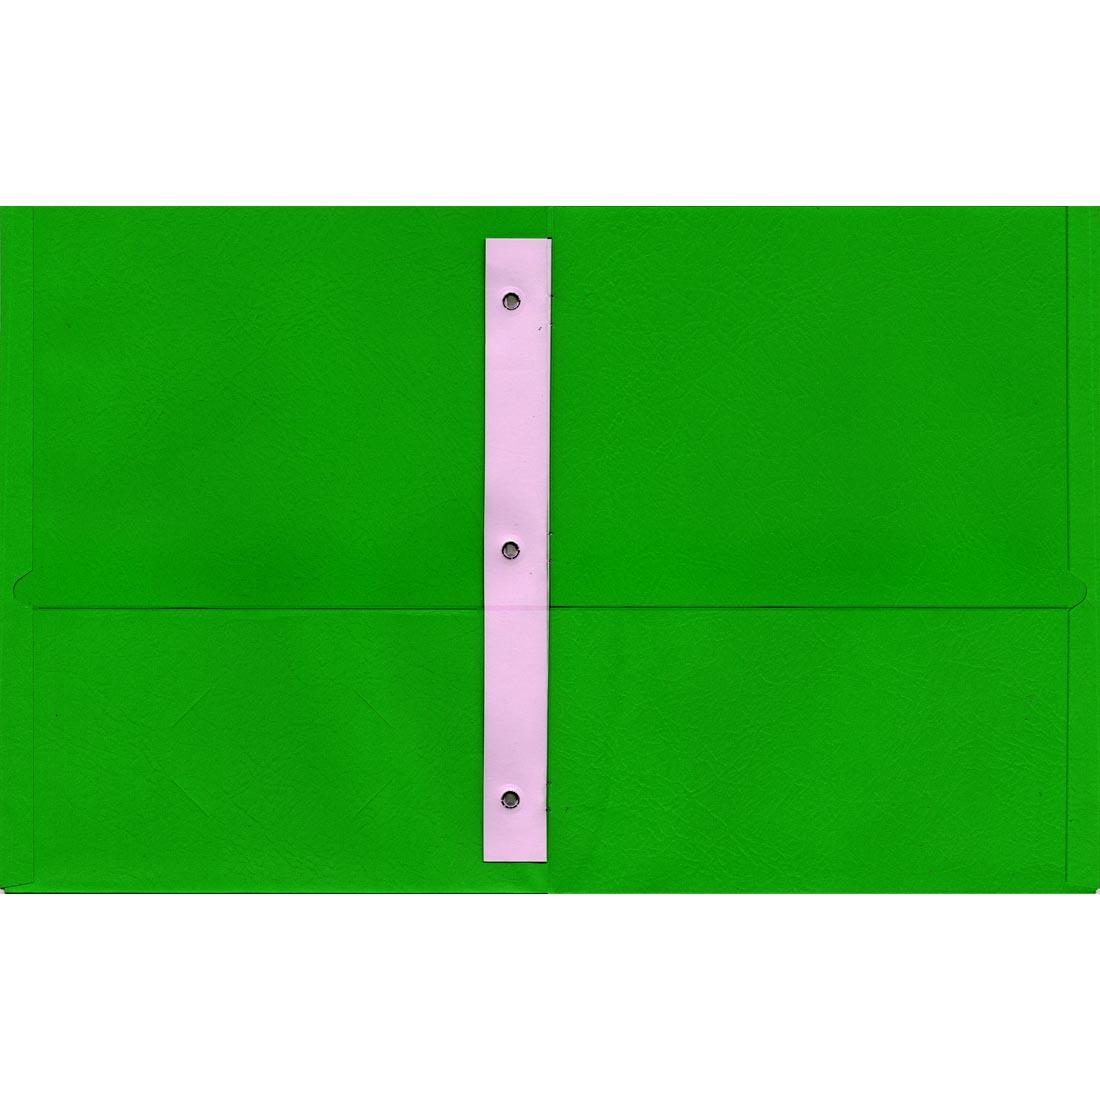 Green Oxford Twin Pocket Portfolio With Fasteners shown open